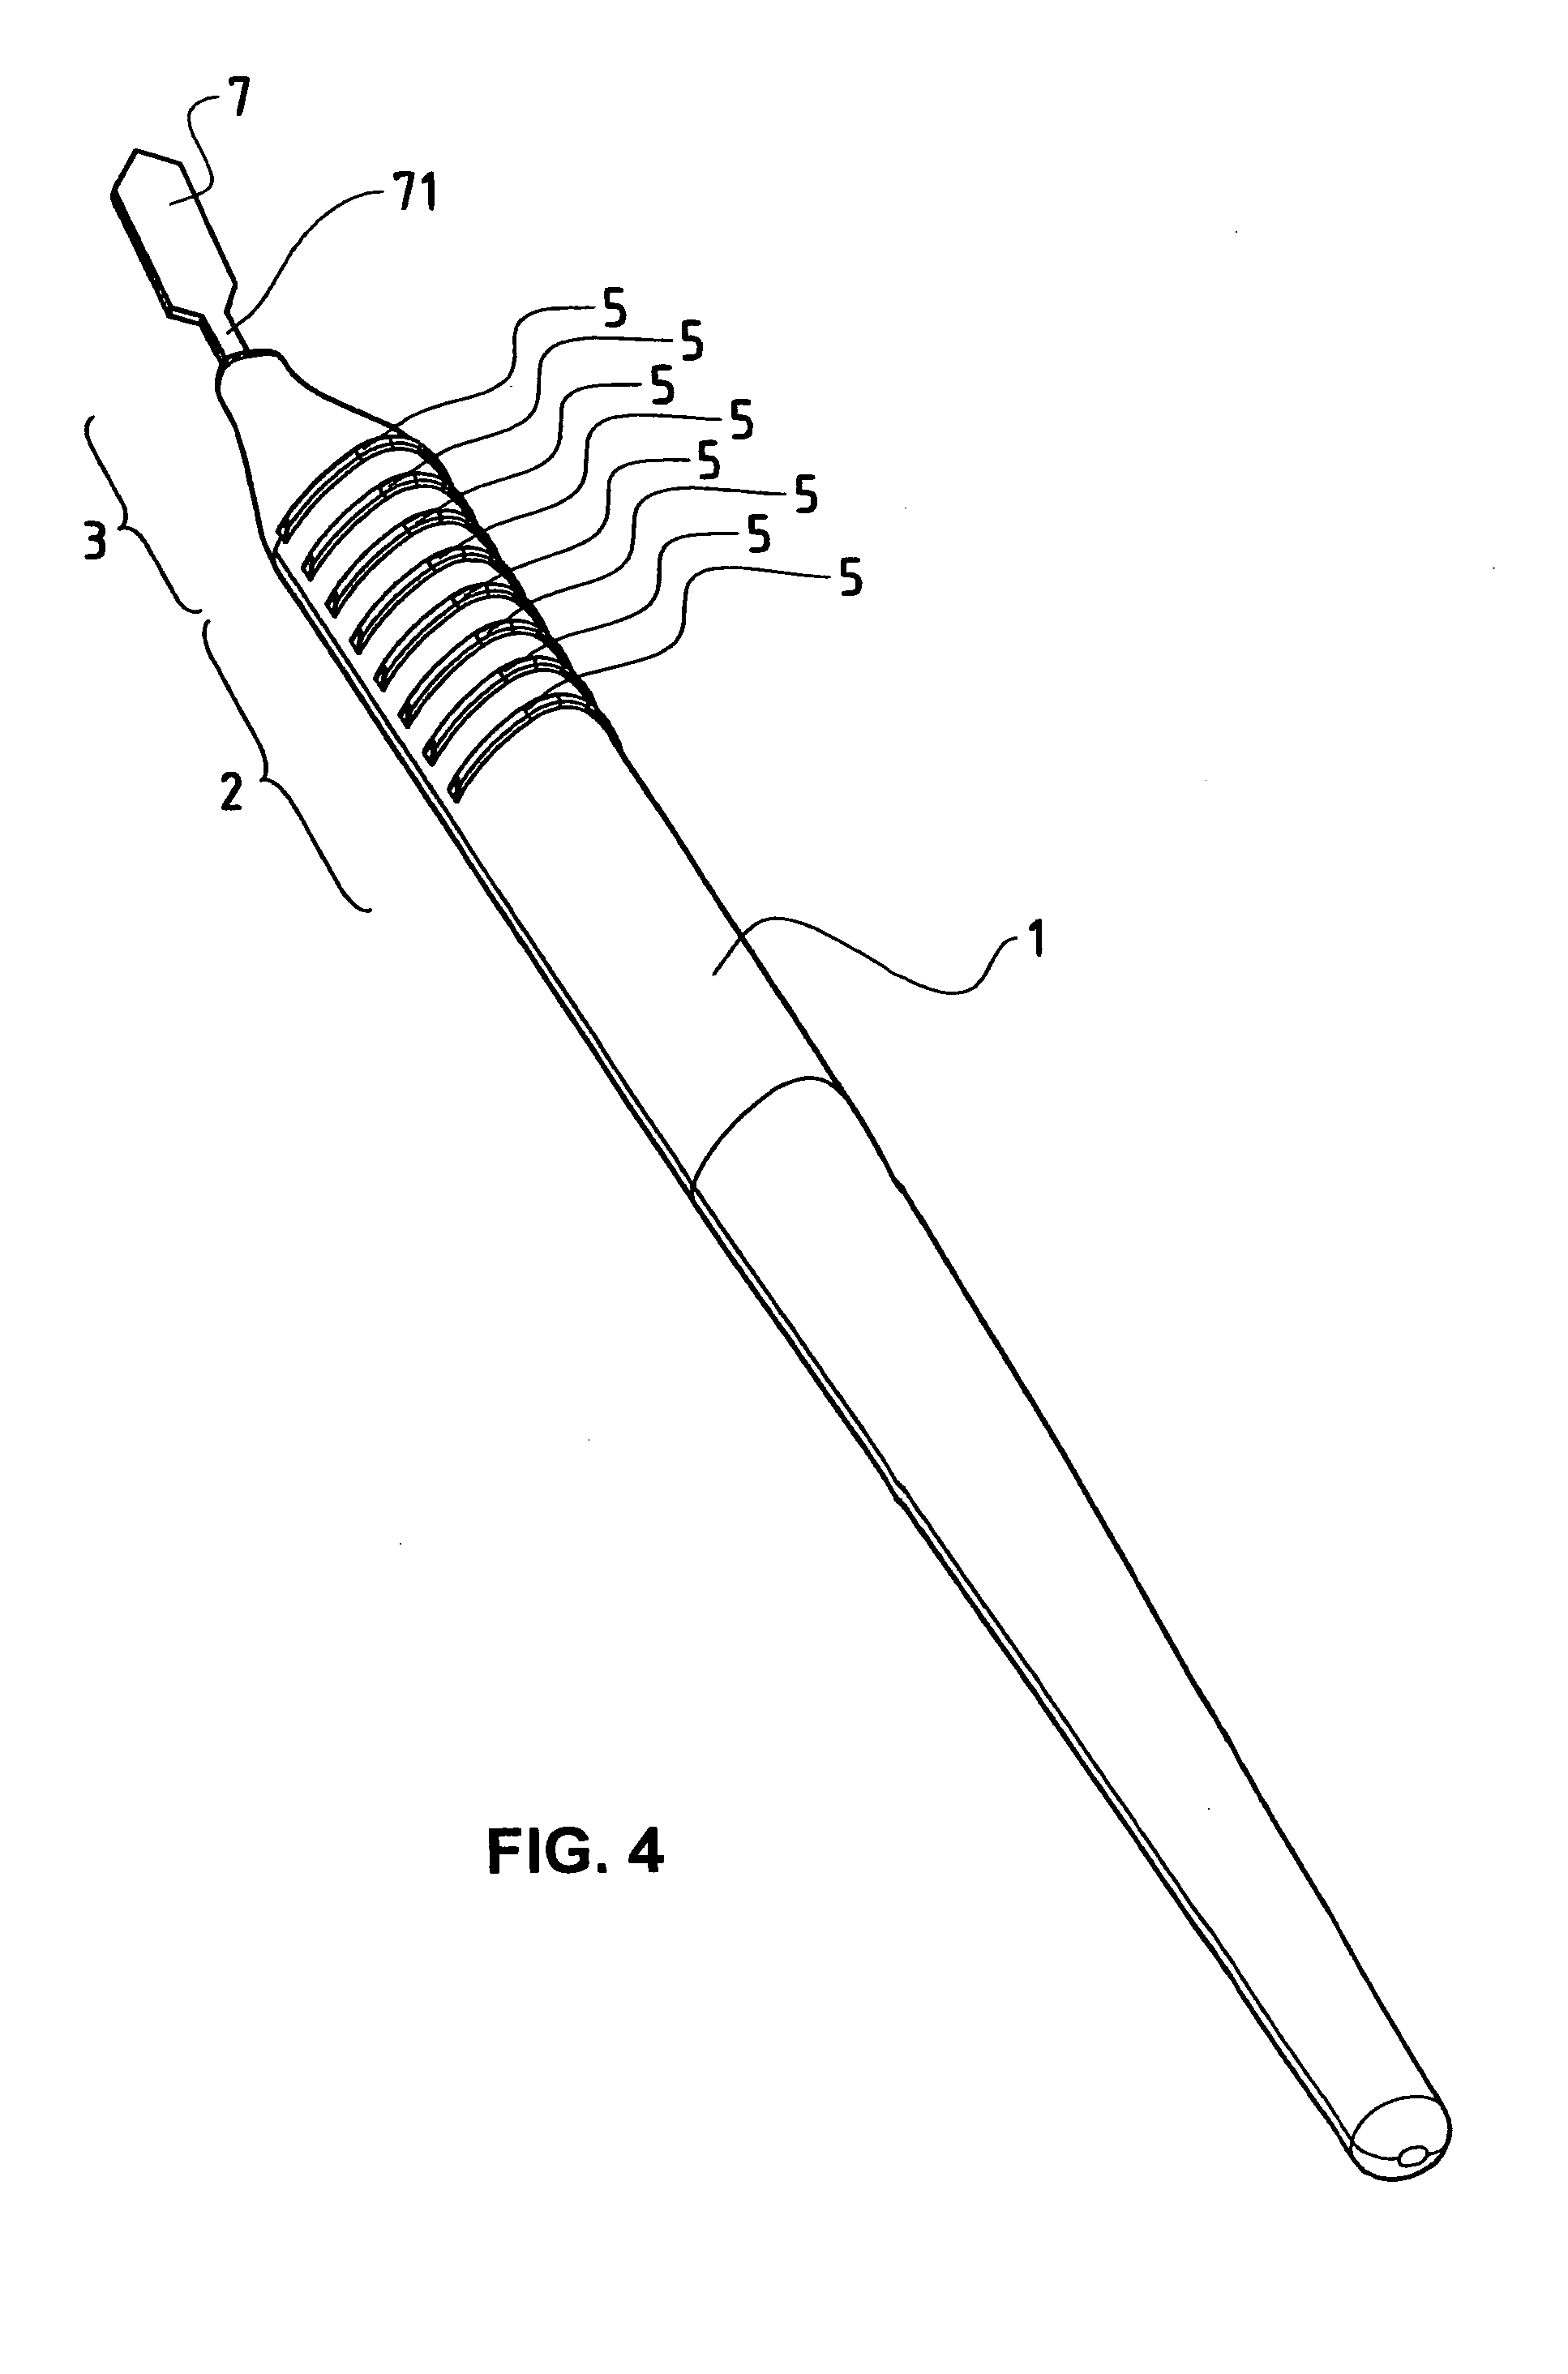 Scalpel blade holder and scalpel